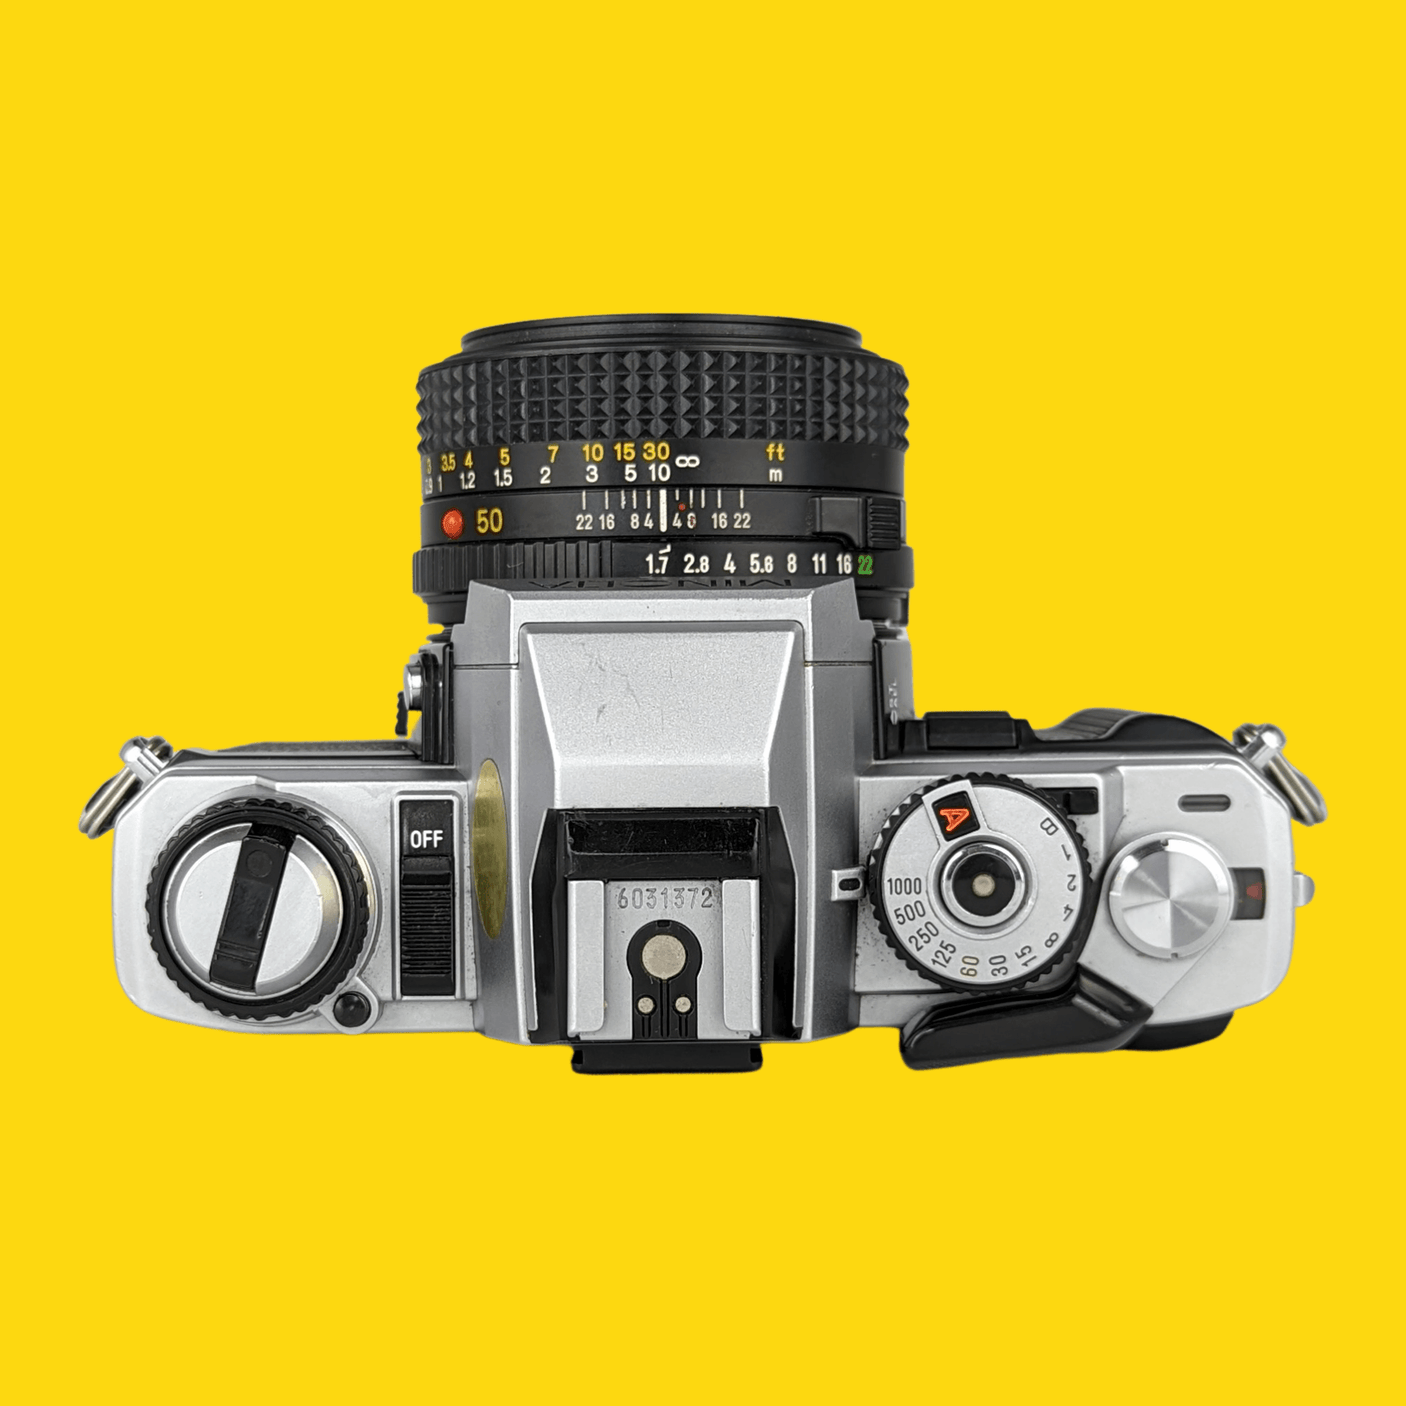 Minolta X-500 SLR 35mm Film Camera with Auto Zoom Lens